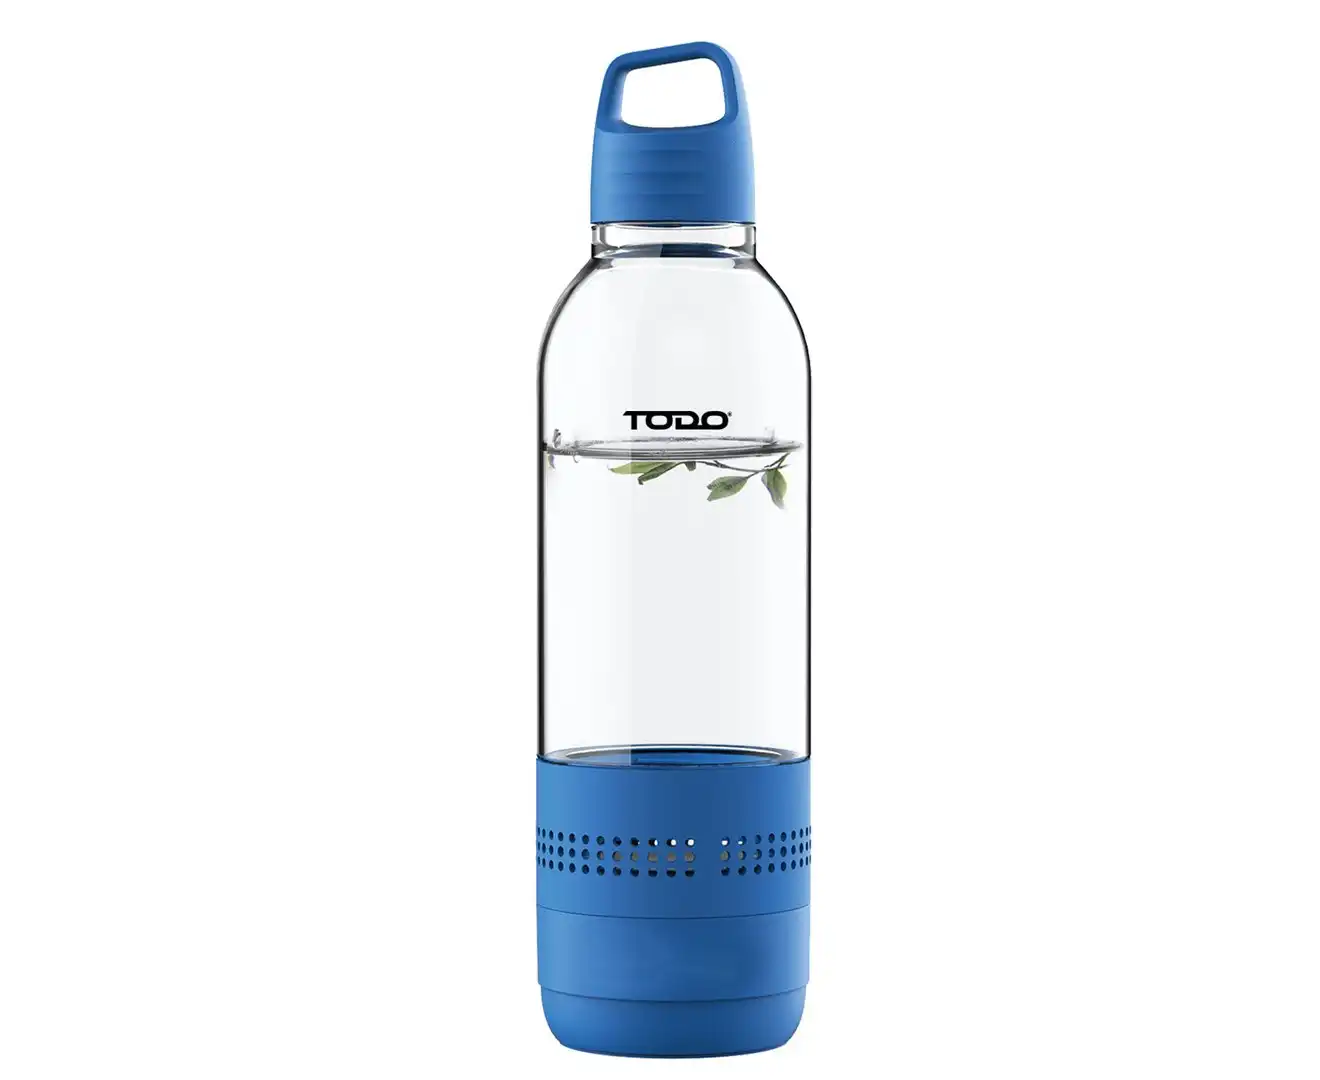 TODO Bluetooth Water Bottle Speaker 400Ml Portable Rechargeable Bottled Speakers - Blue